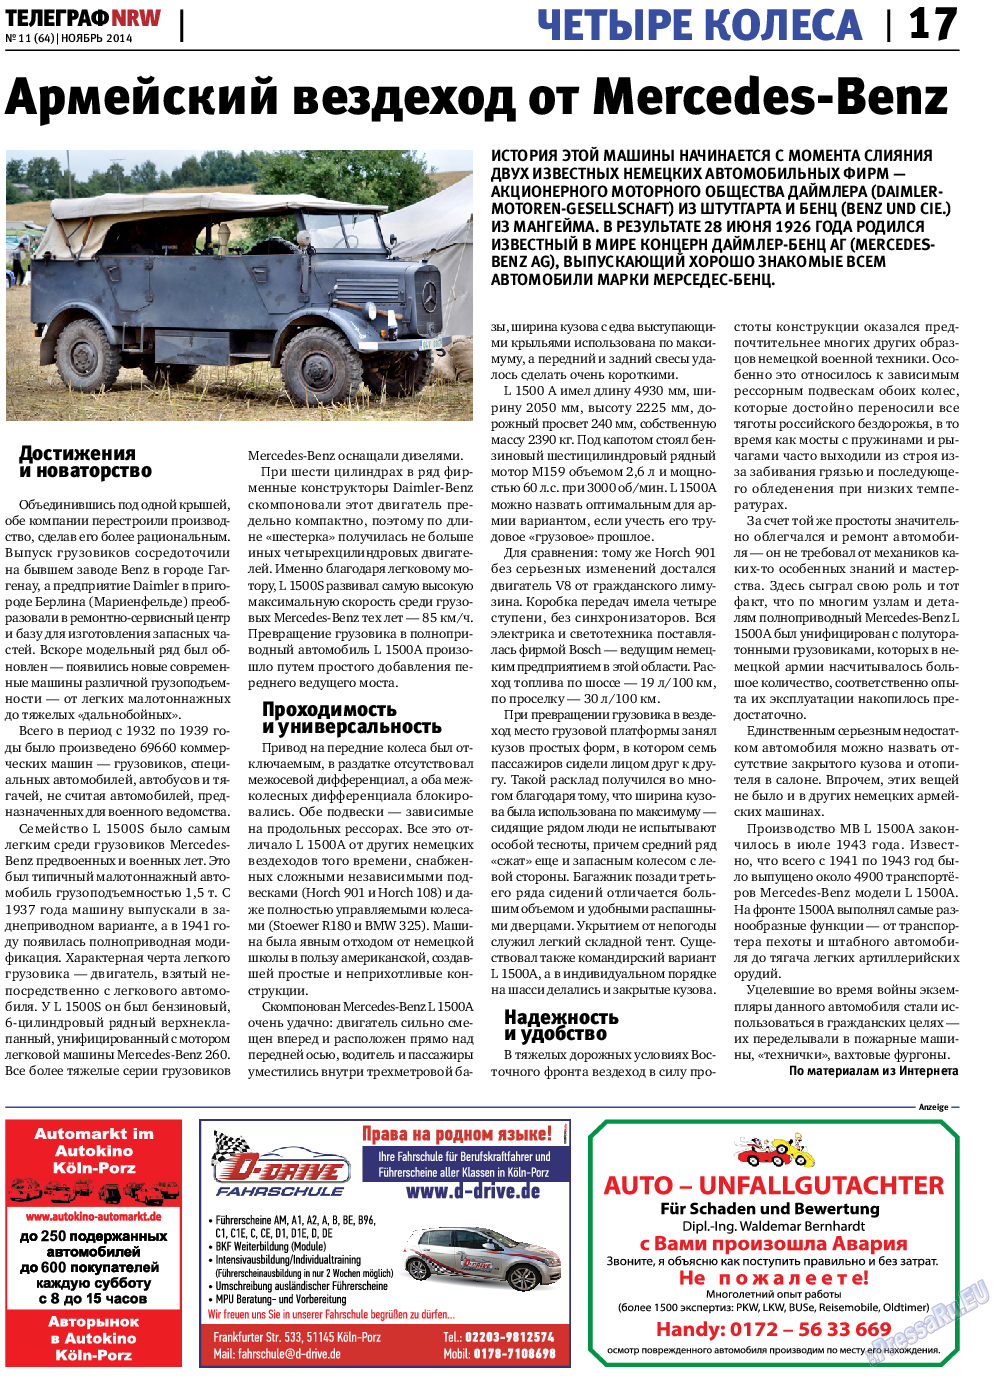 Телеграф NRW, газета. 2014 №11 стр.17